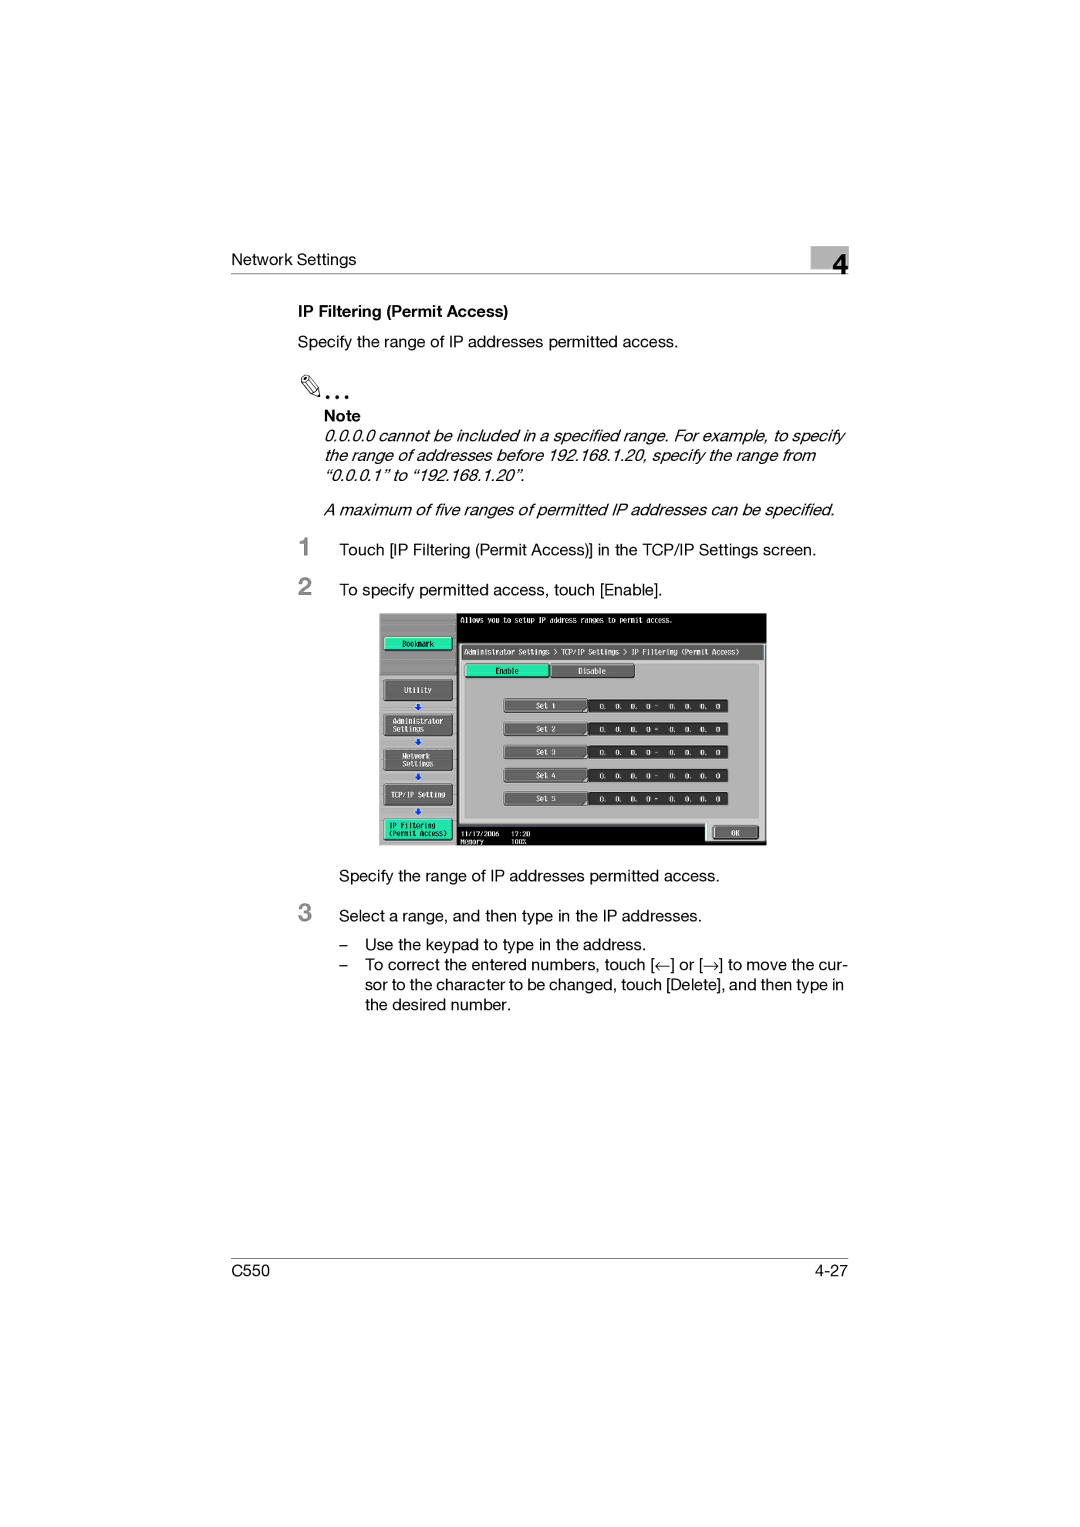 Konica Minolta C550 manual IP Filtering Permit Access 